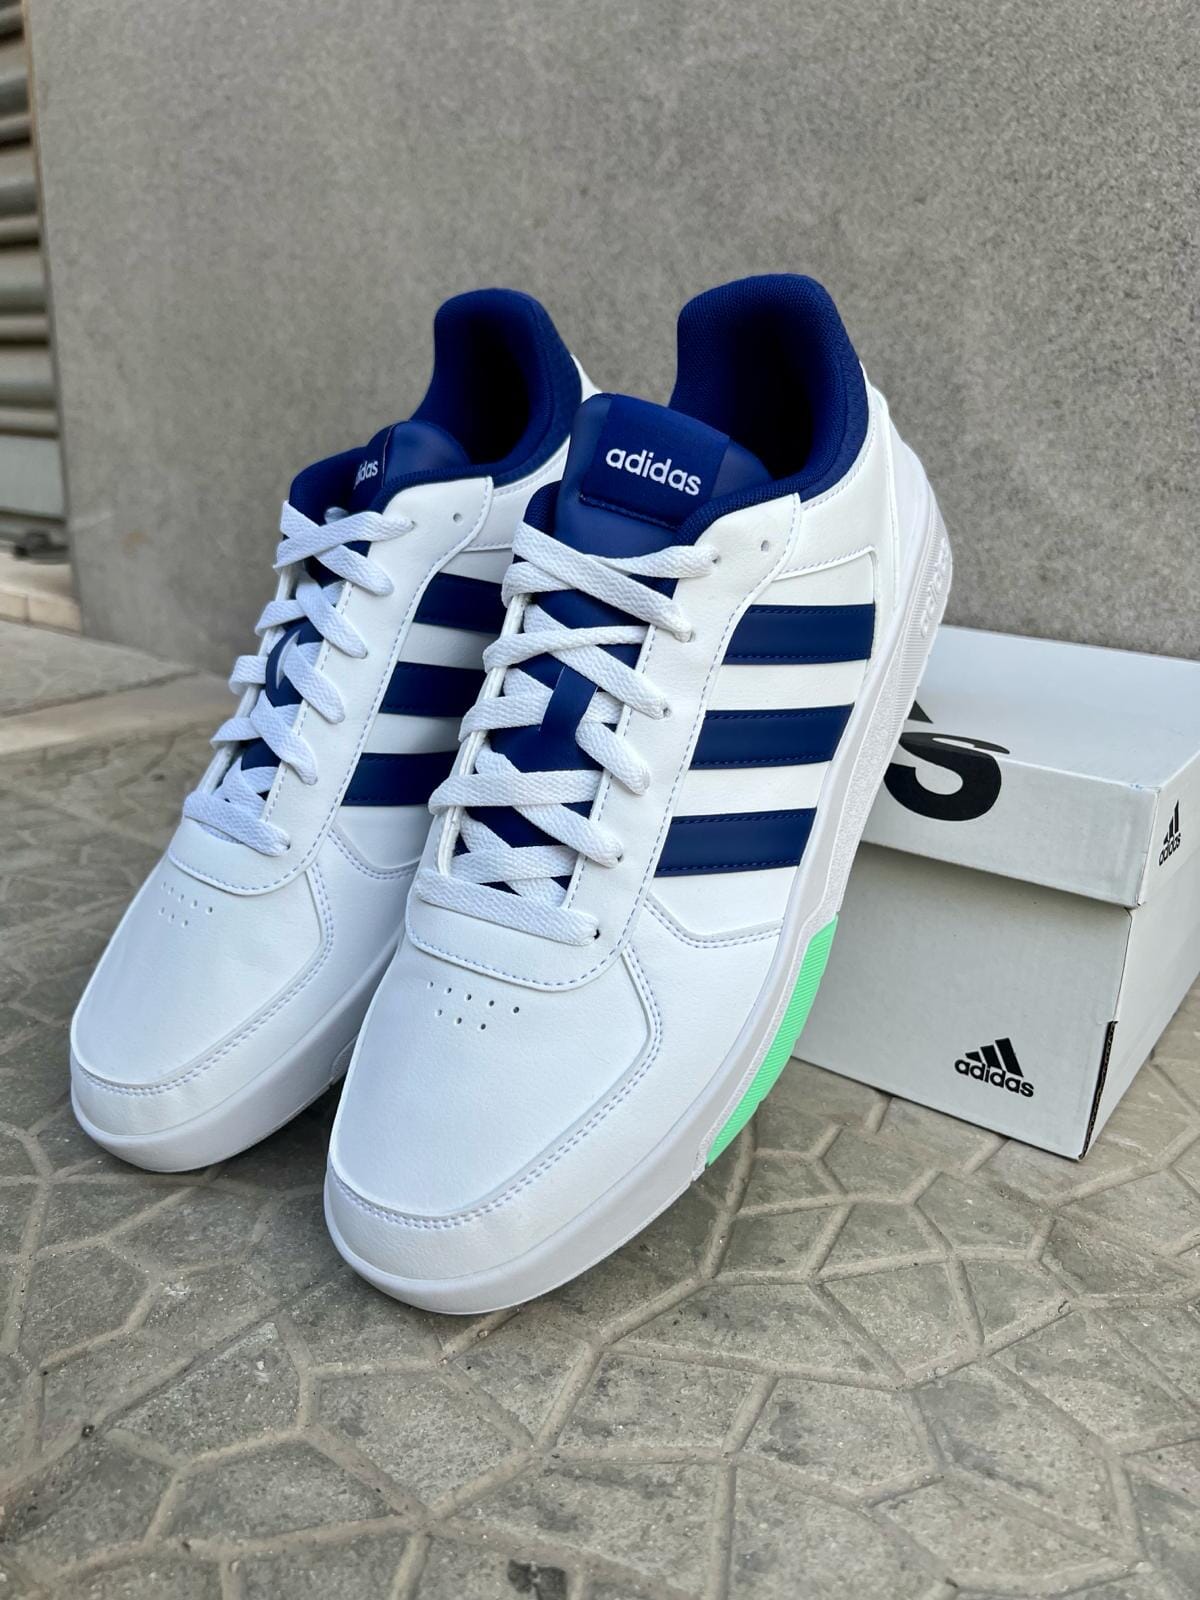 Adidas Courtbeat hq1767